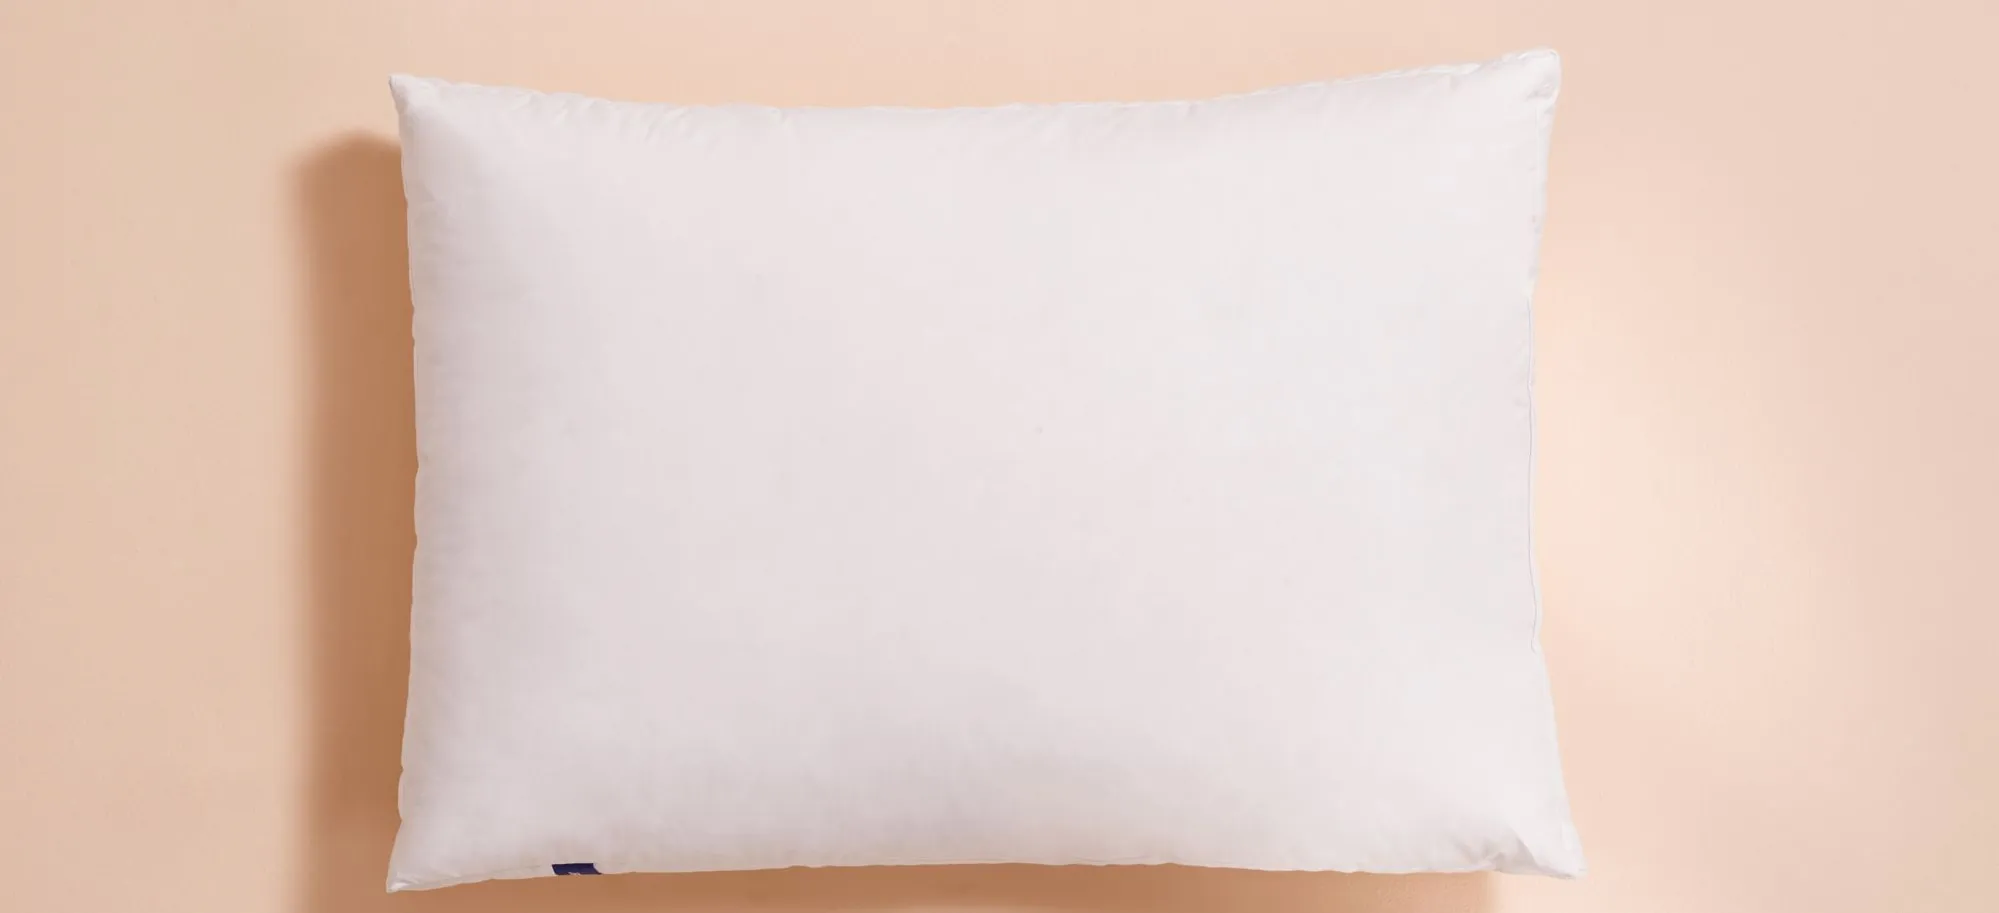 Casper King Down Pillow in White by Casper